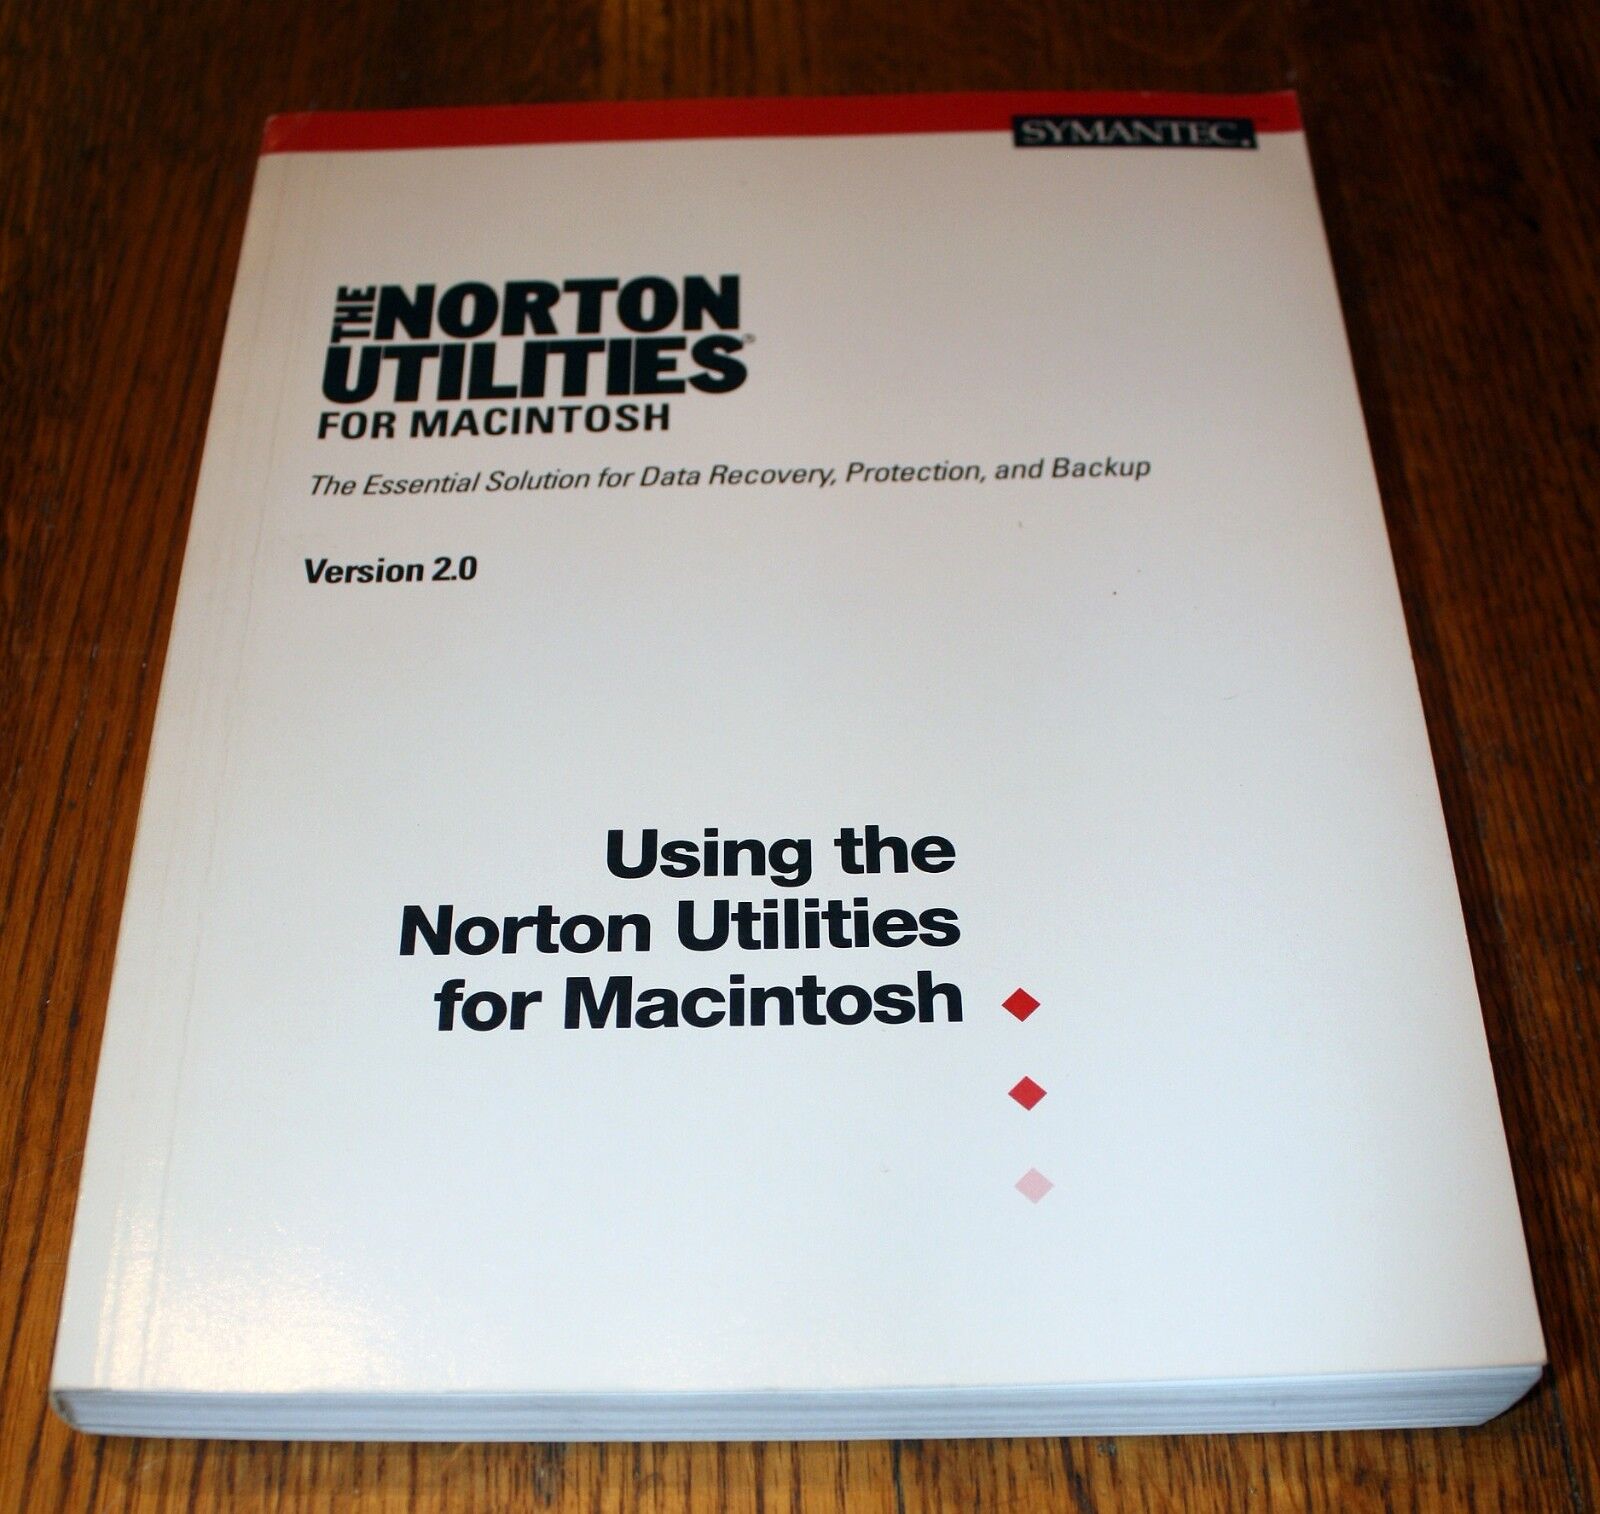 Vintage Apple Mac • The NORTON Utilities for Macintosh Version 2.0 User's Guide